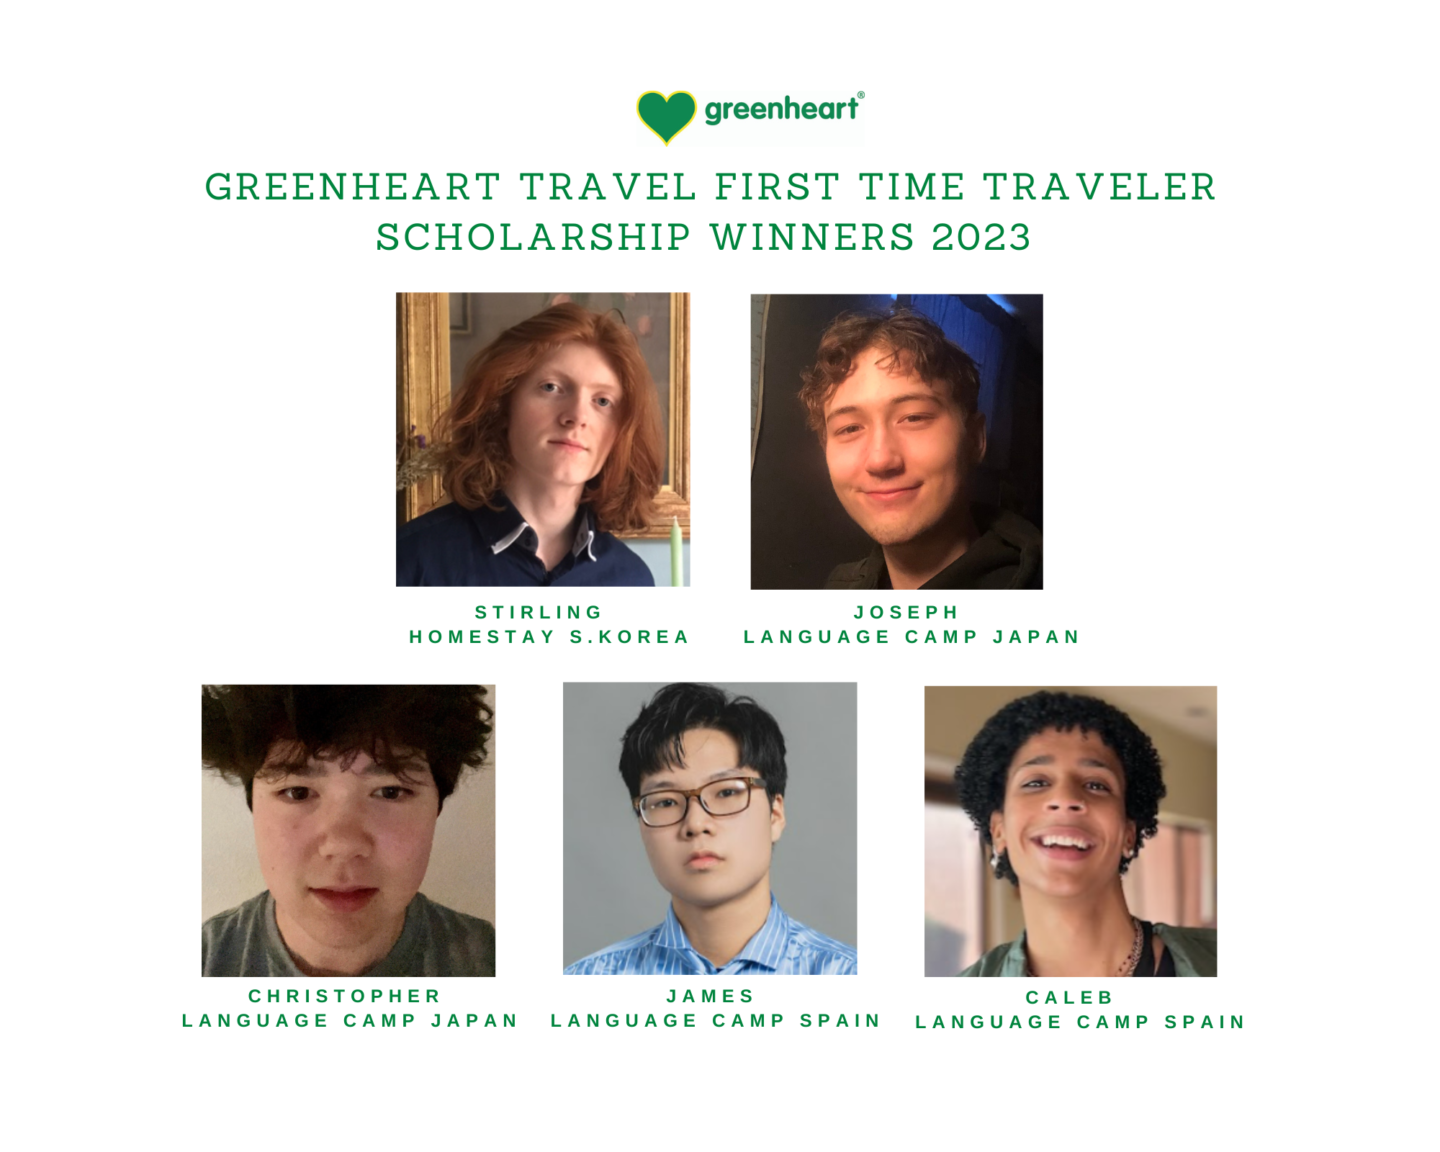 Meet the 2023 First Time Traveler Scholarship Winners!